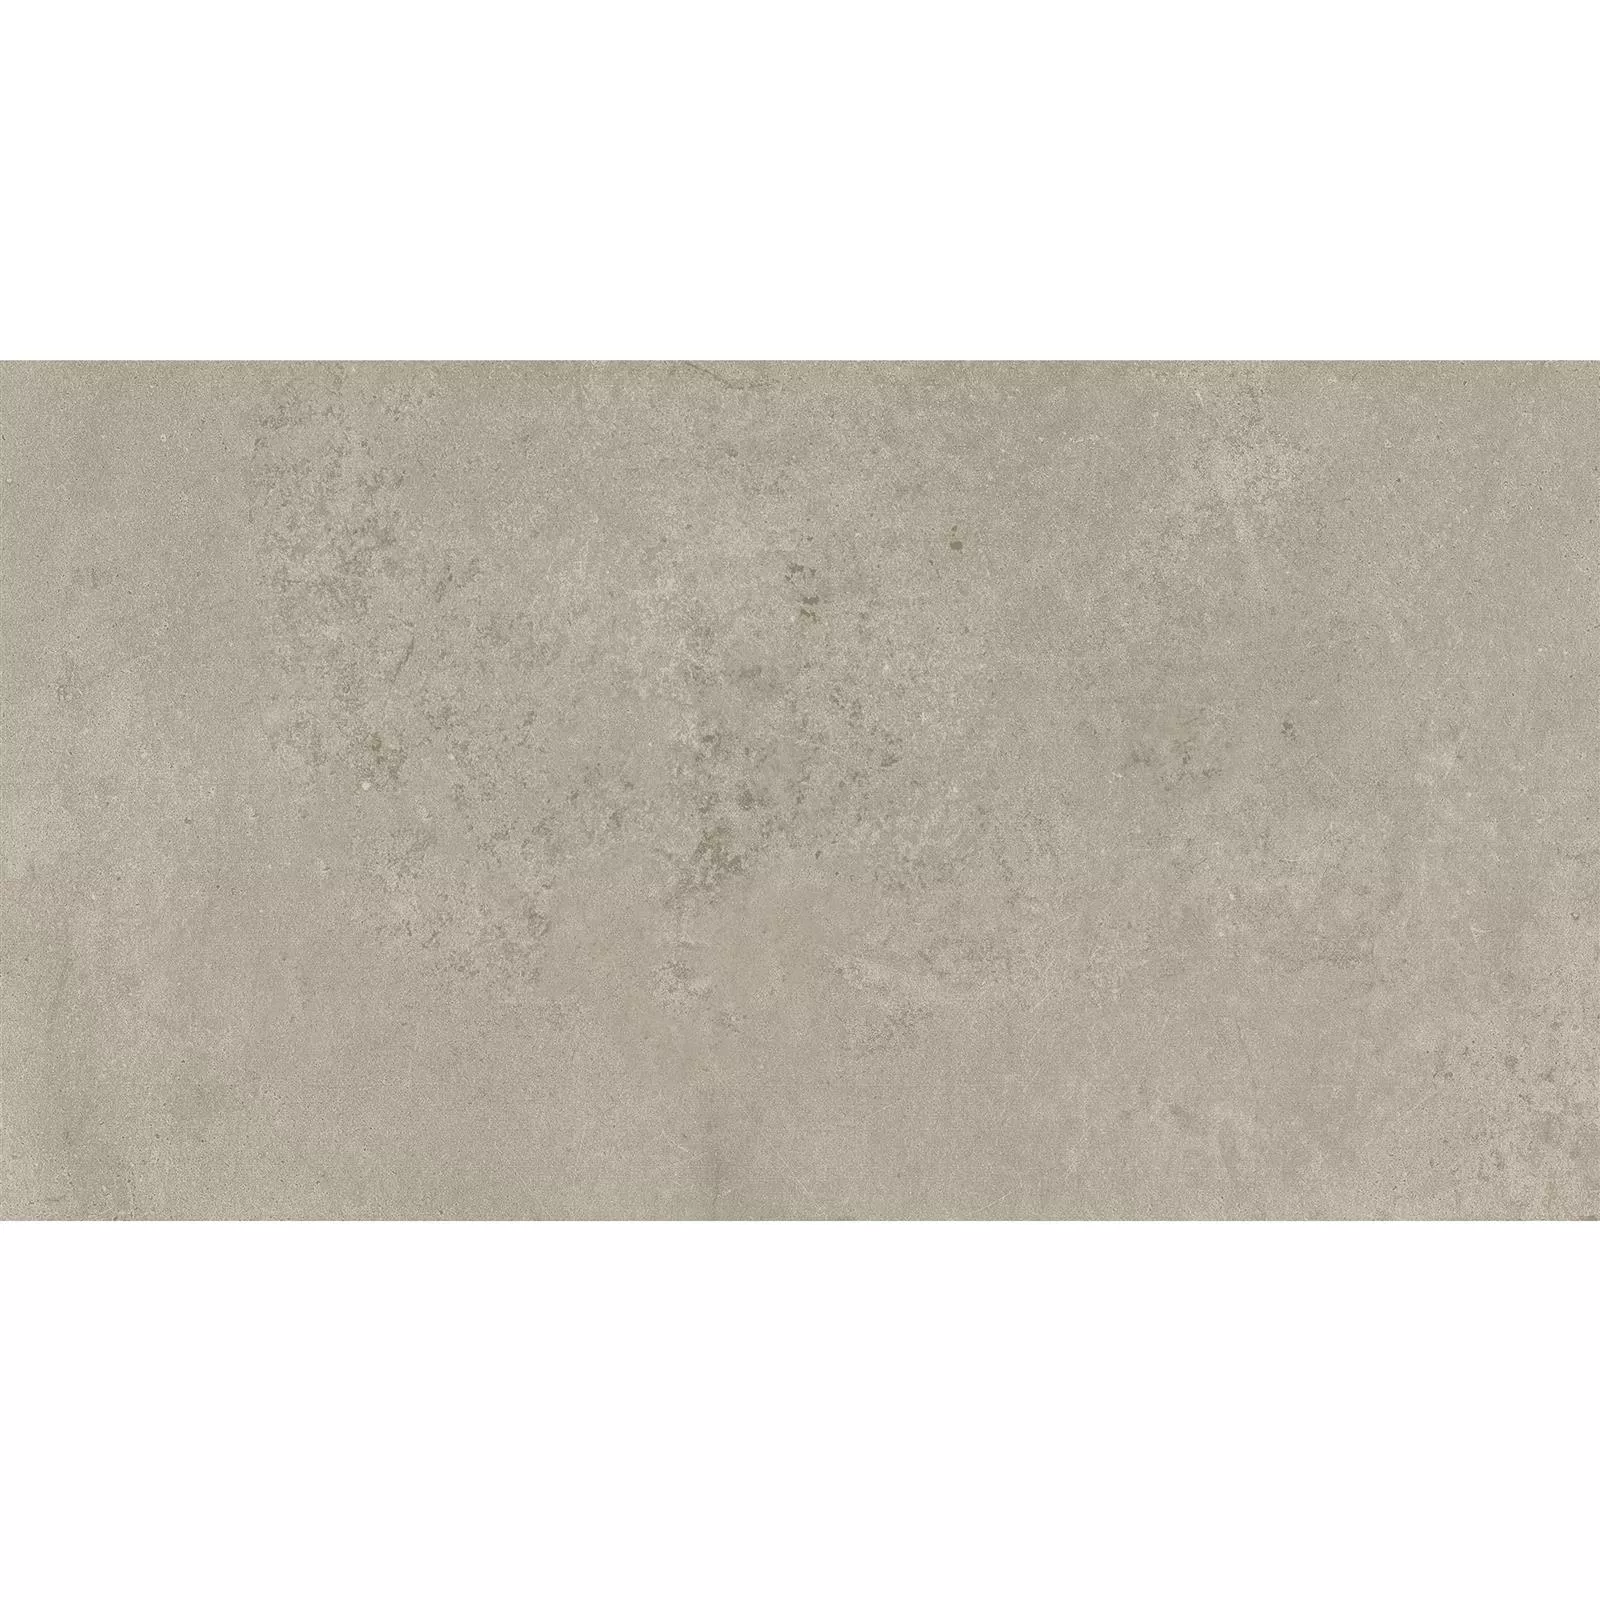 Vzorek Podlahové Dlaždice Nepal Béžová 30x60x0,7cm